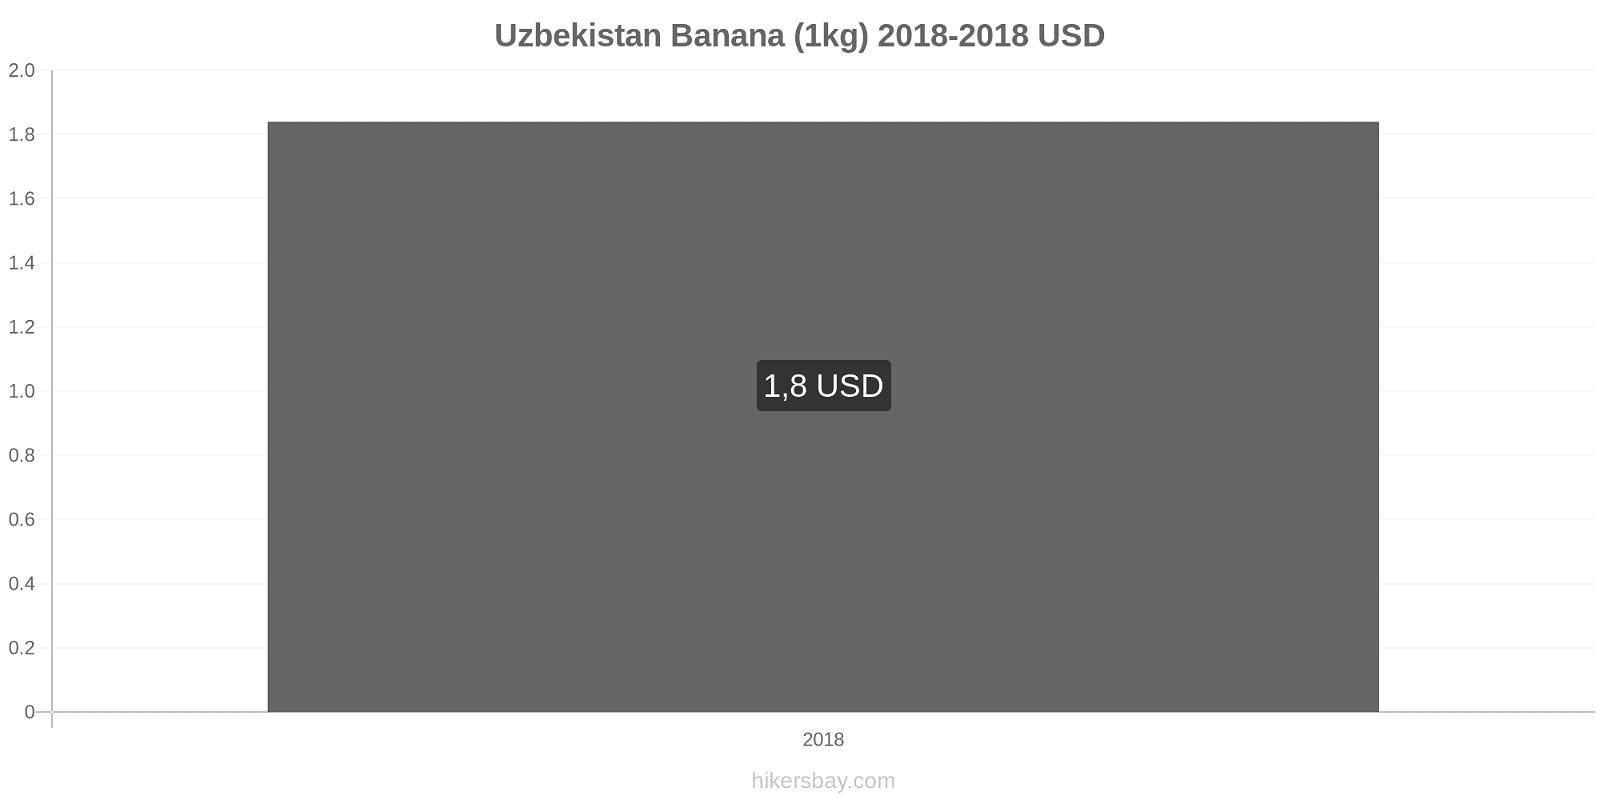 Uzbekistan cambi di prezzo Banane (1kg) hikersbay.com